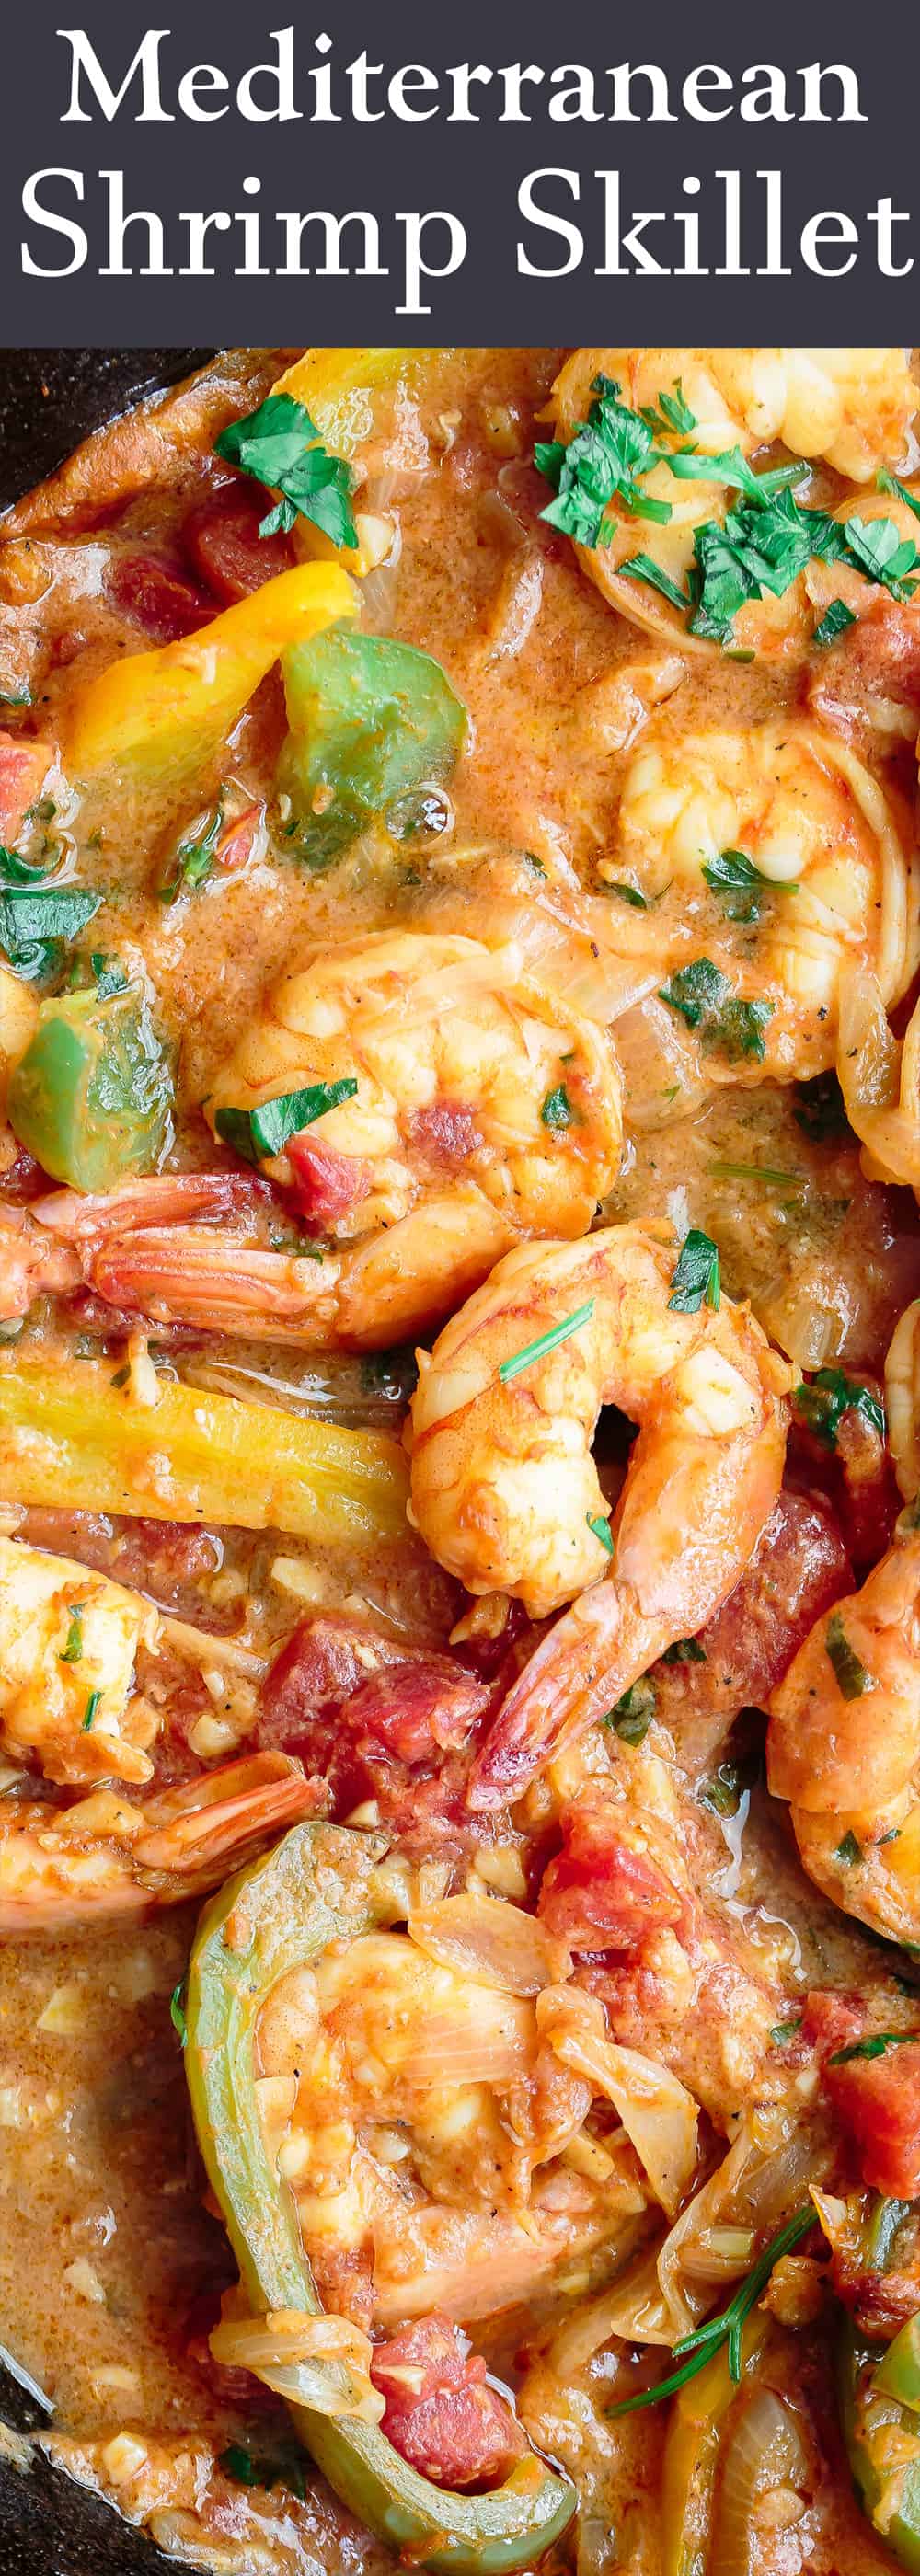 Easy Shrimp Recipe, Mediterranean-Style | The Mediterranean Dish